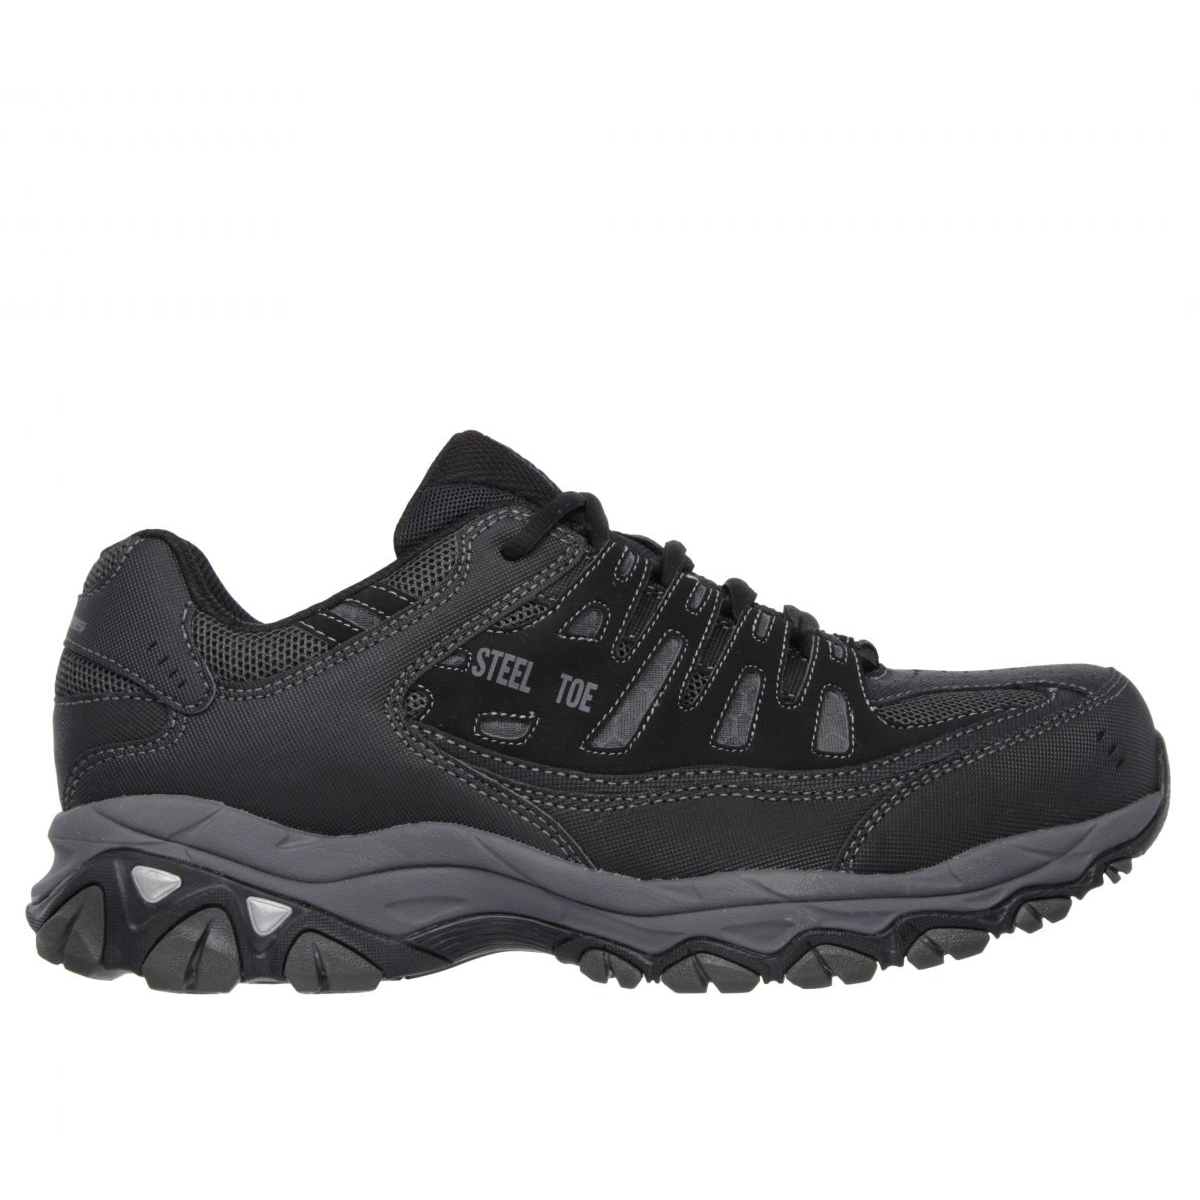 Skechers Men's Cankton-U Industrial Shoe 7 BLACK/CHARCOAL - BLACK/CHARCOAL, 13 Wide